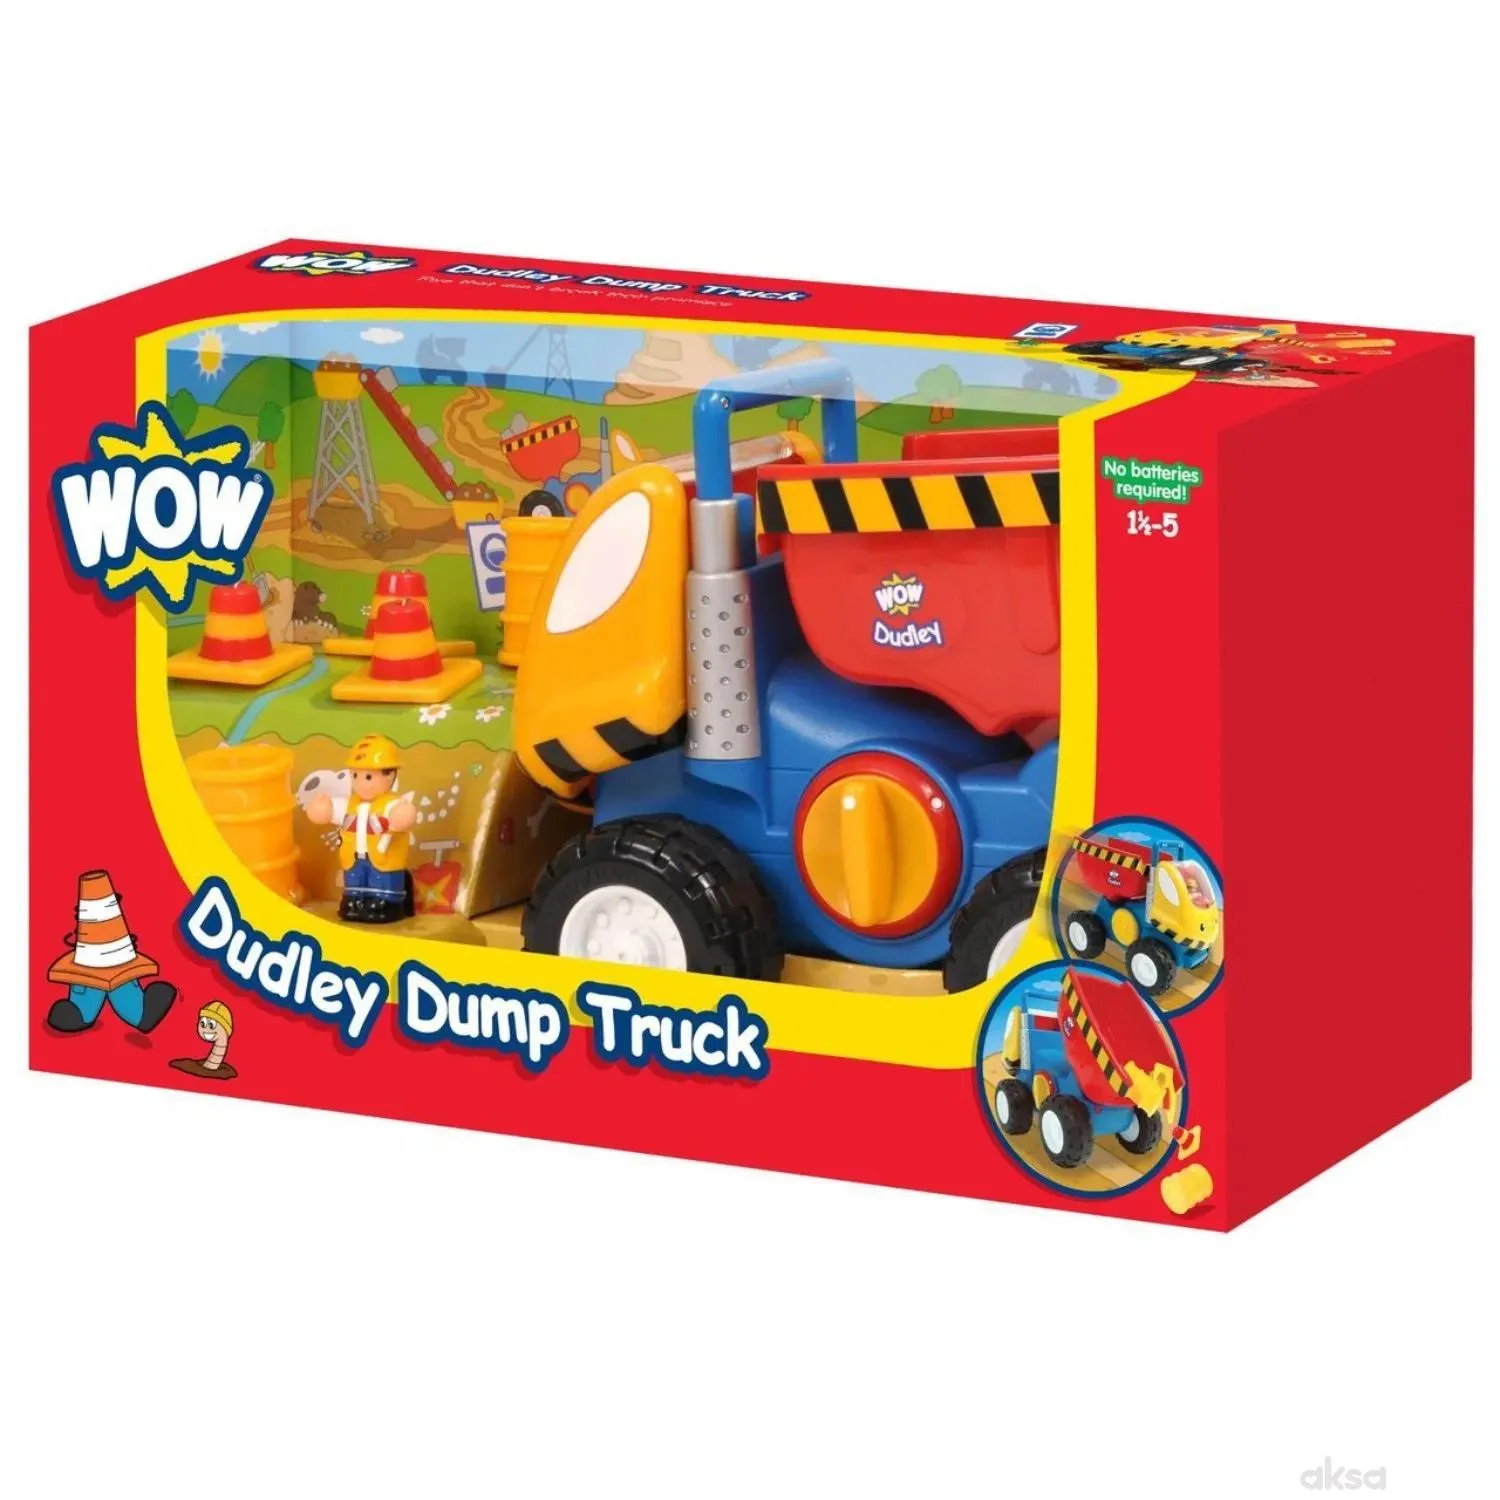 Wow igračka kamion Dudley Dump Truck 